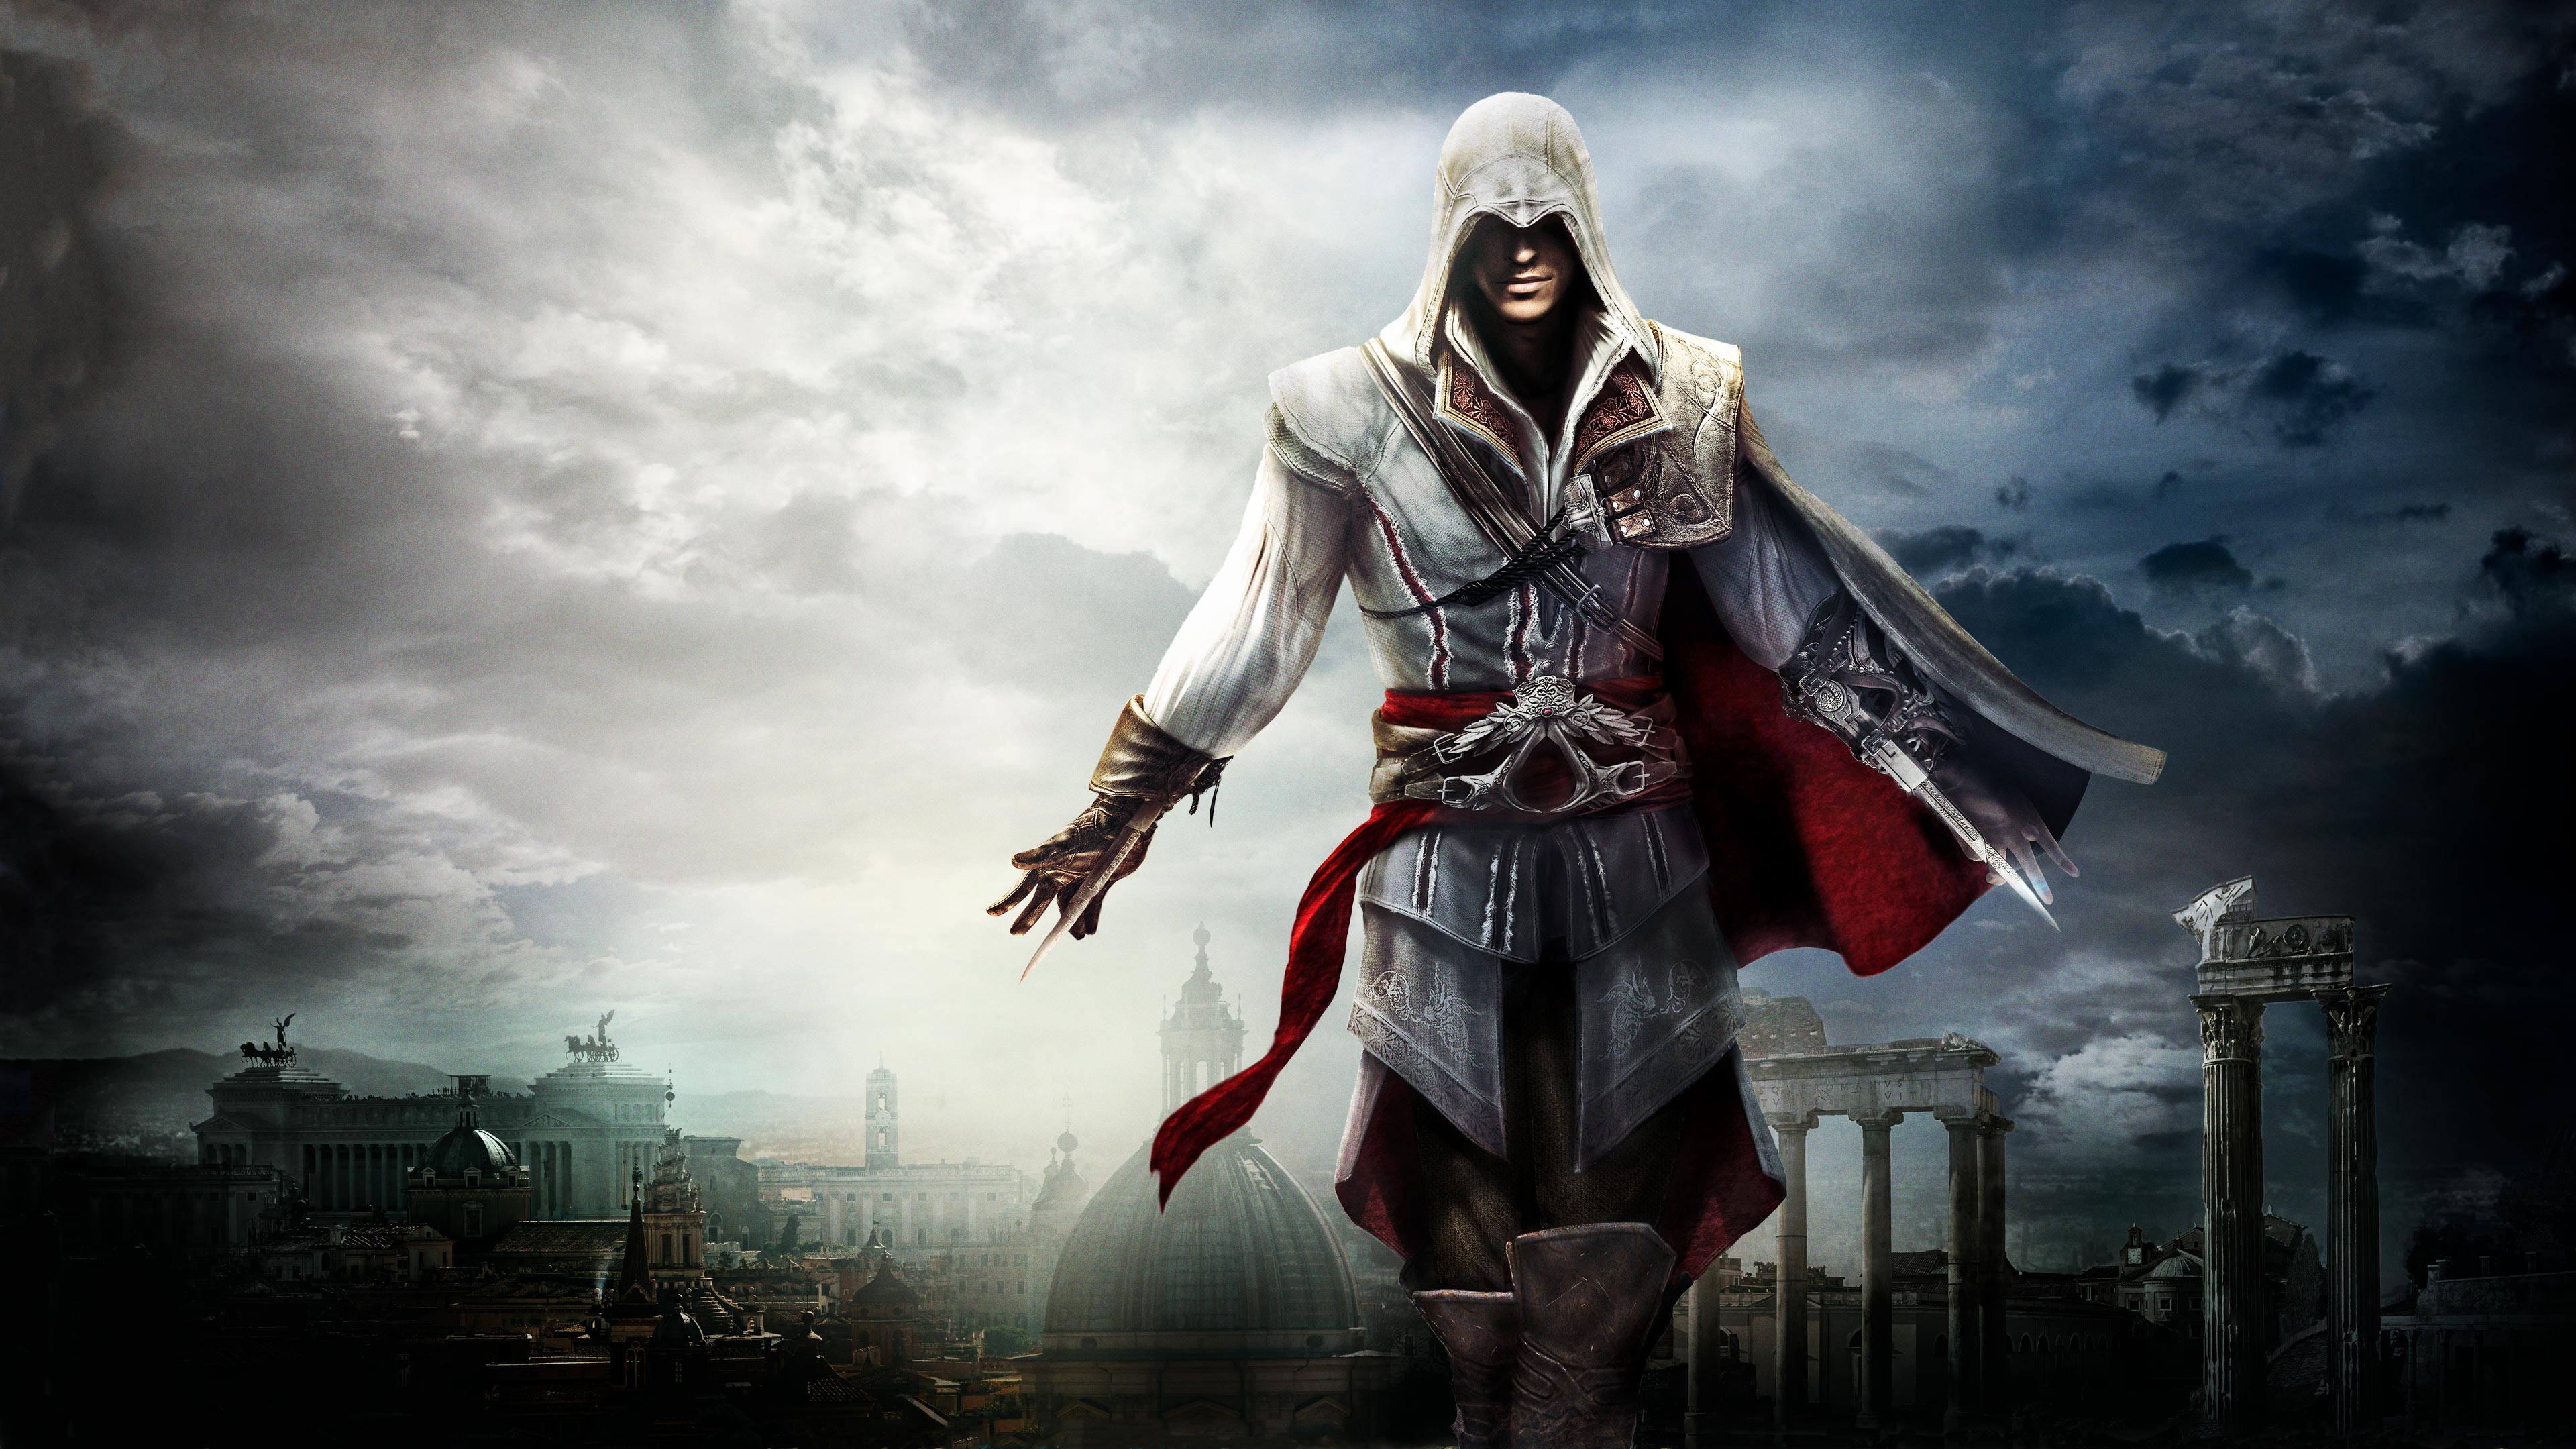 Assassin’s Creed® The Ezio Collection